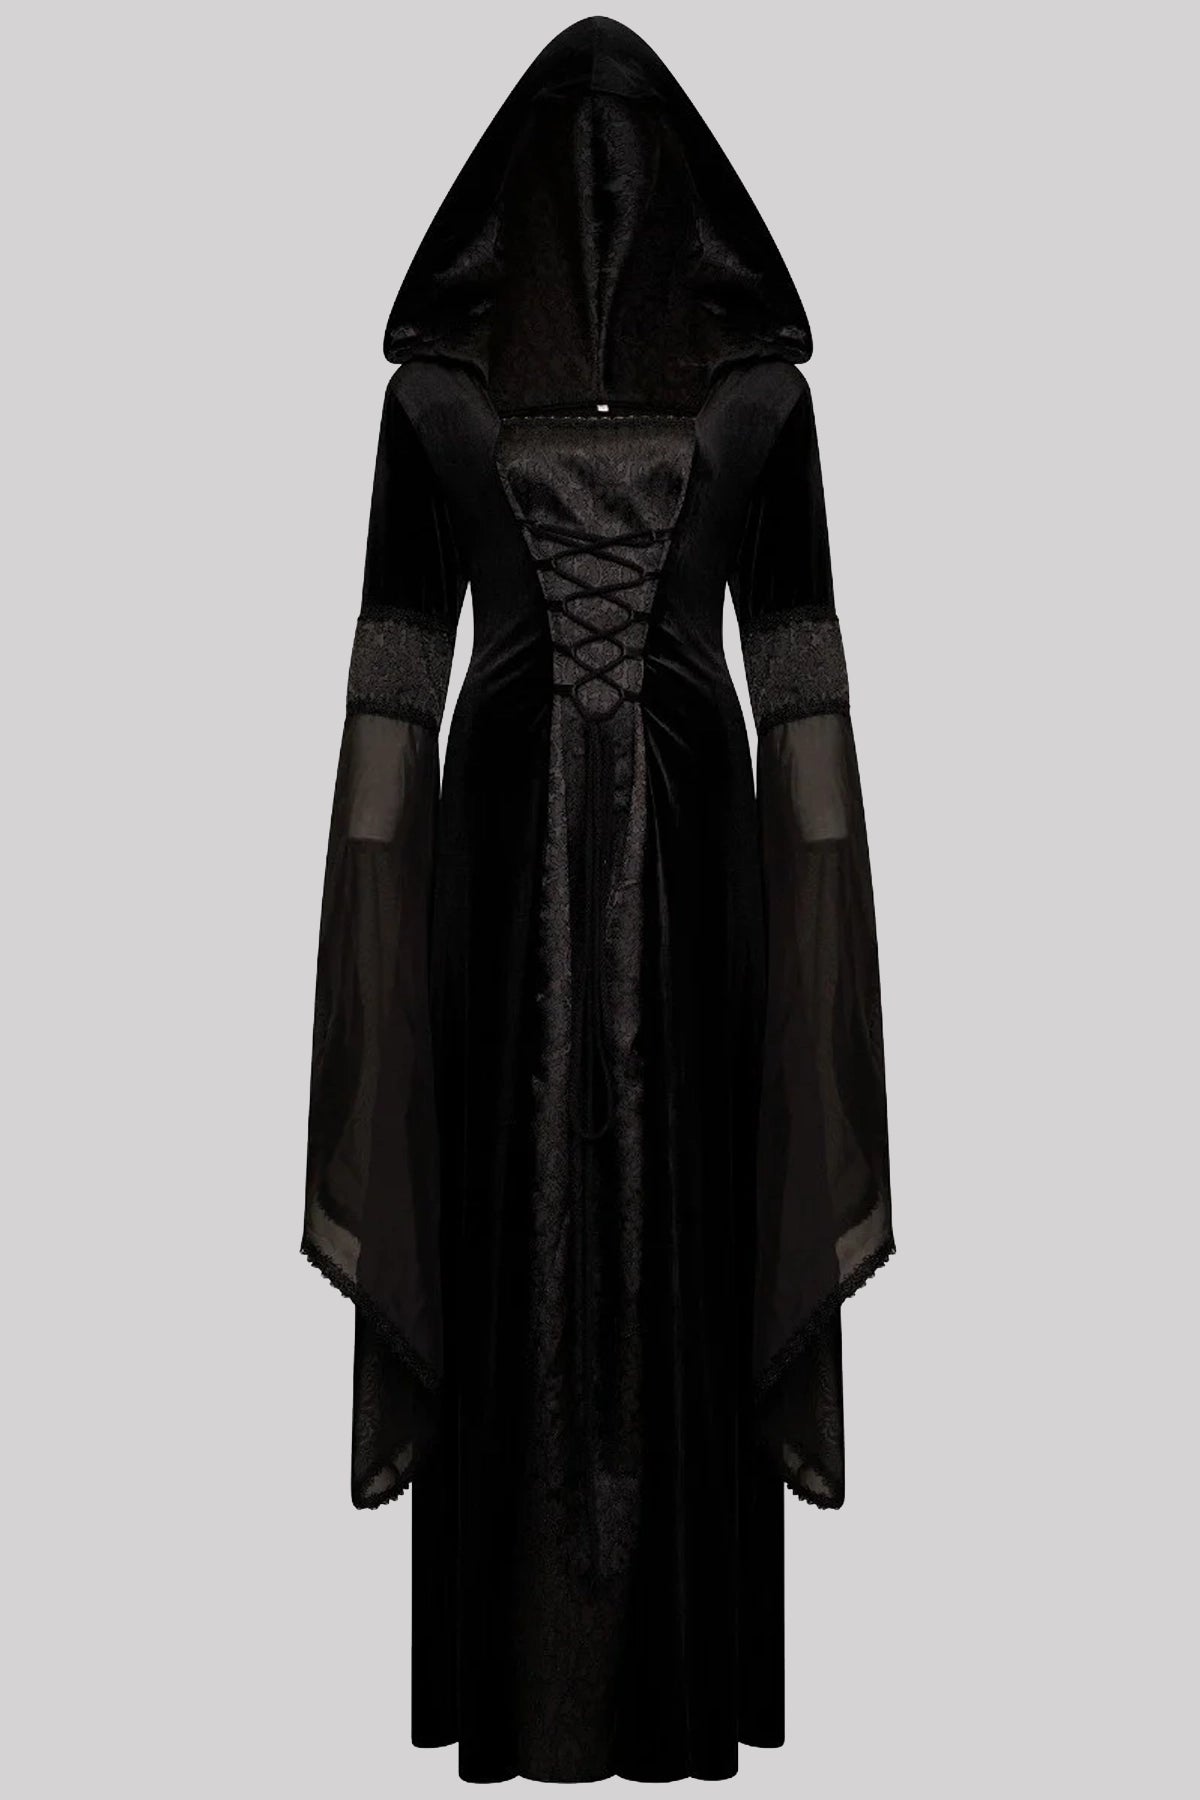 Ro Rox Lucinda Medieval Tunic Maxi Renaissance Gothic Dress